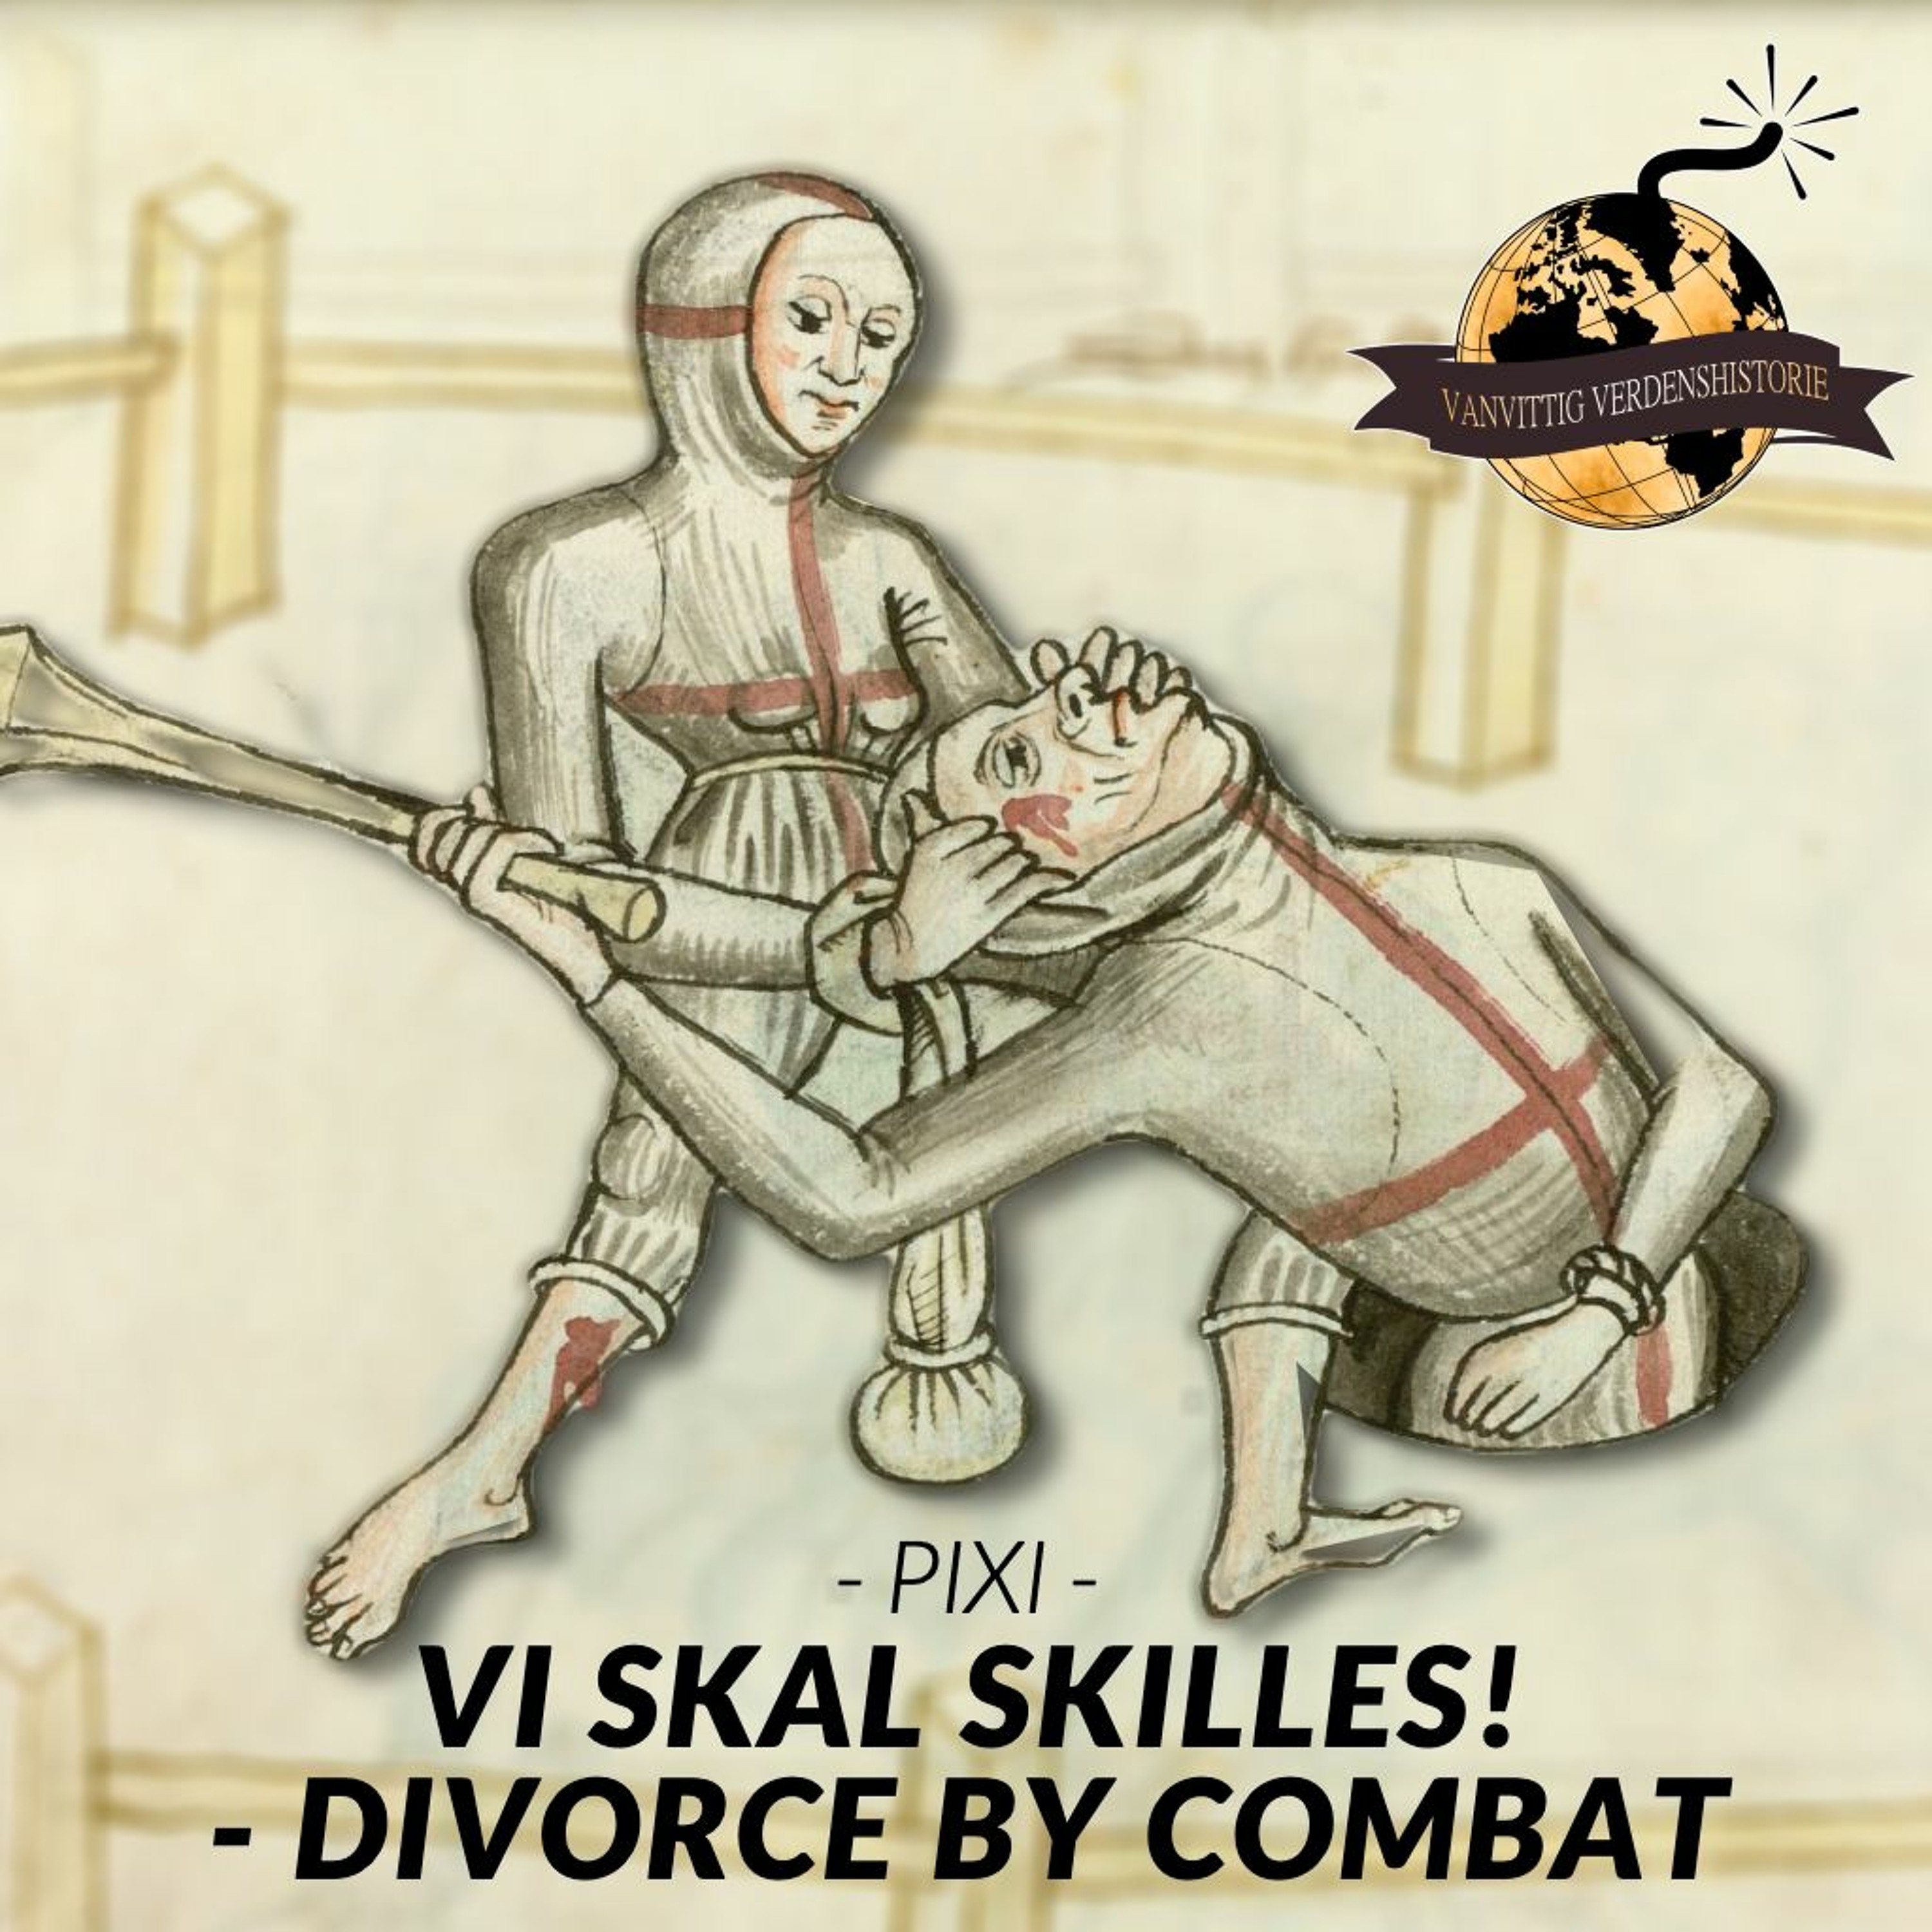 PIXI: Vi skal skilles! - Divorce by Combat!